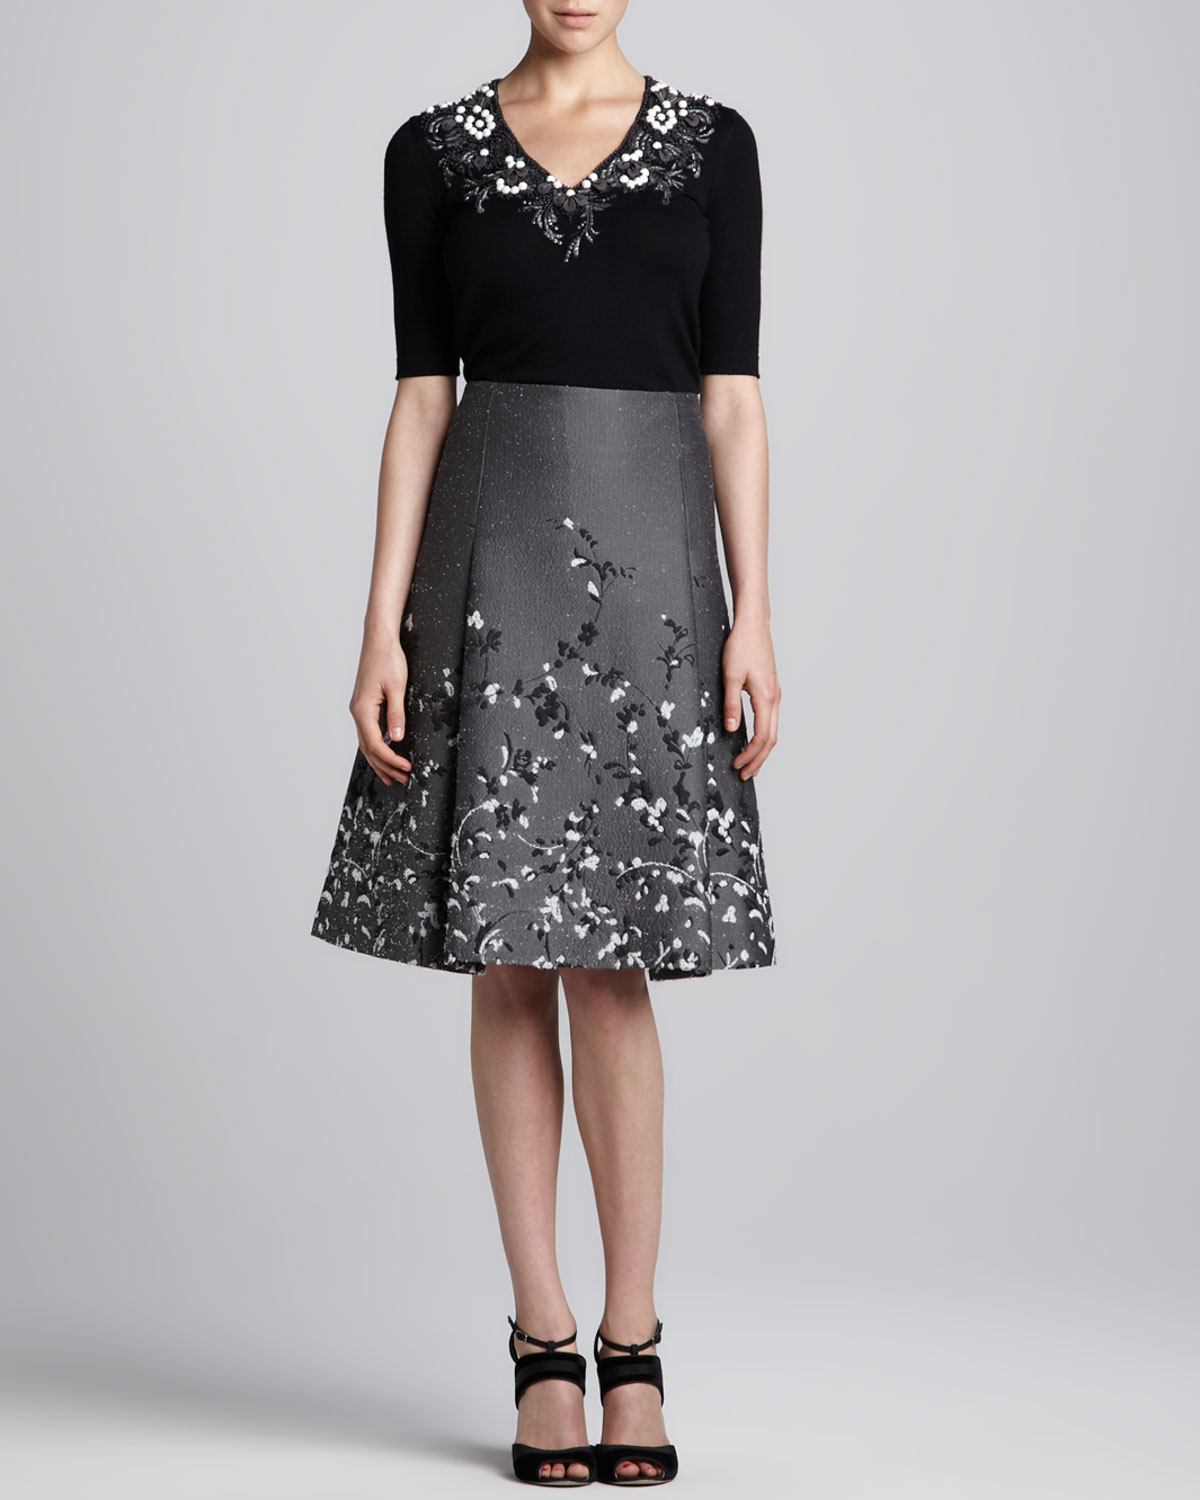 Carolina Herrera Floral-Embroidered Jacquard Skirt in Floral | Lyst